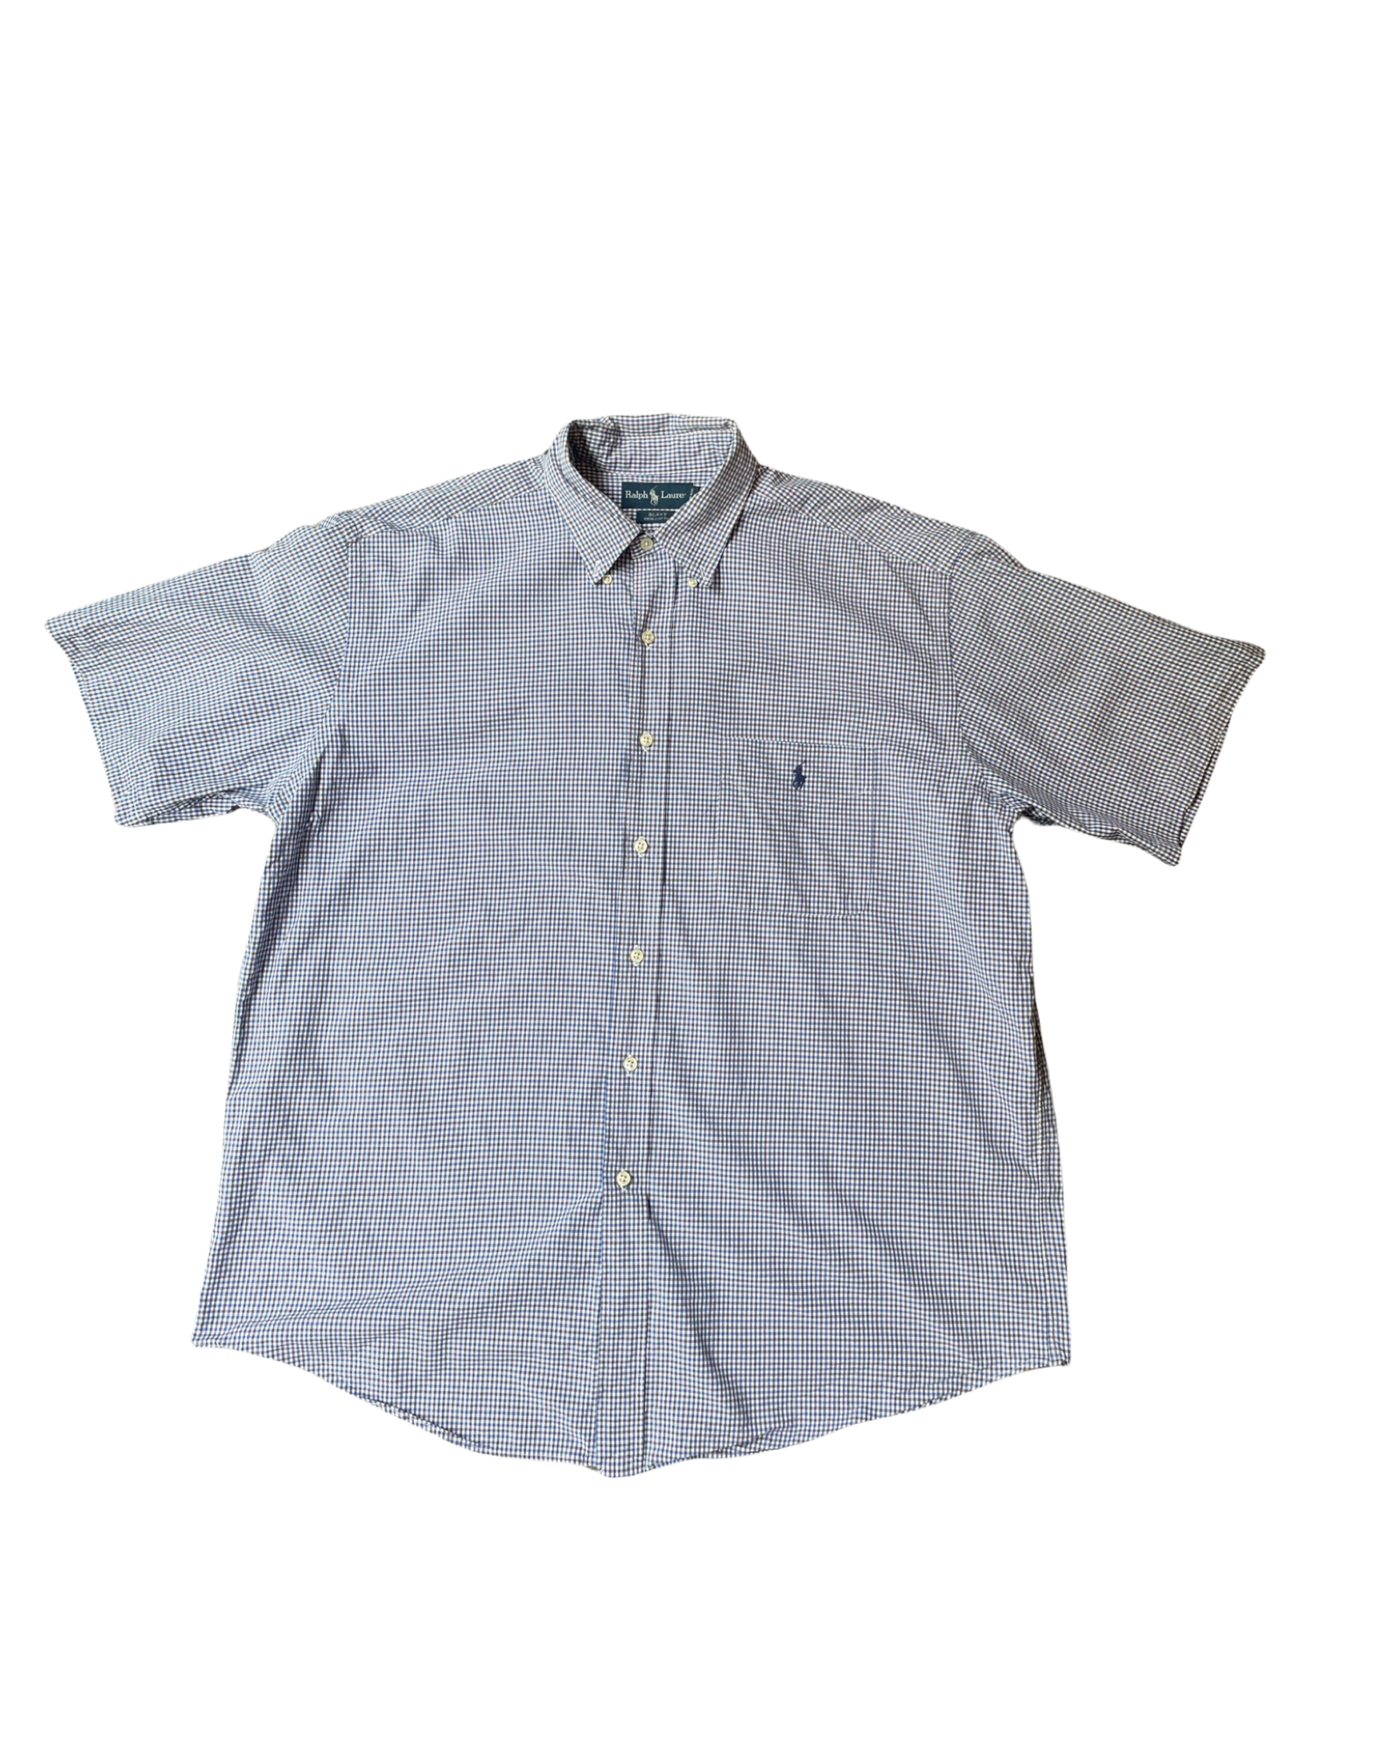 Vintage Ralph Lauren Shirt Size XL